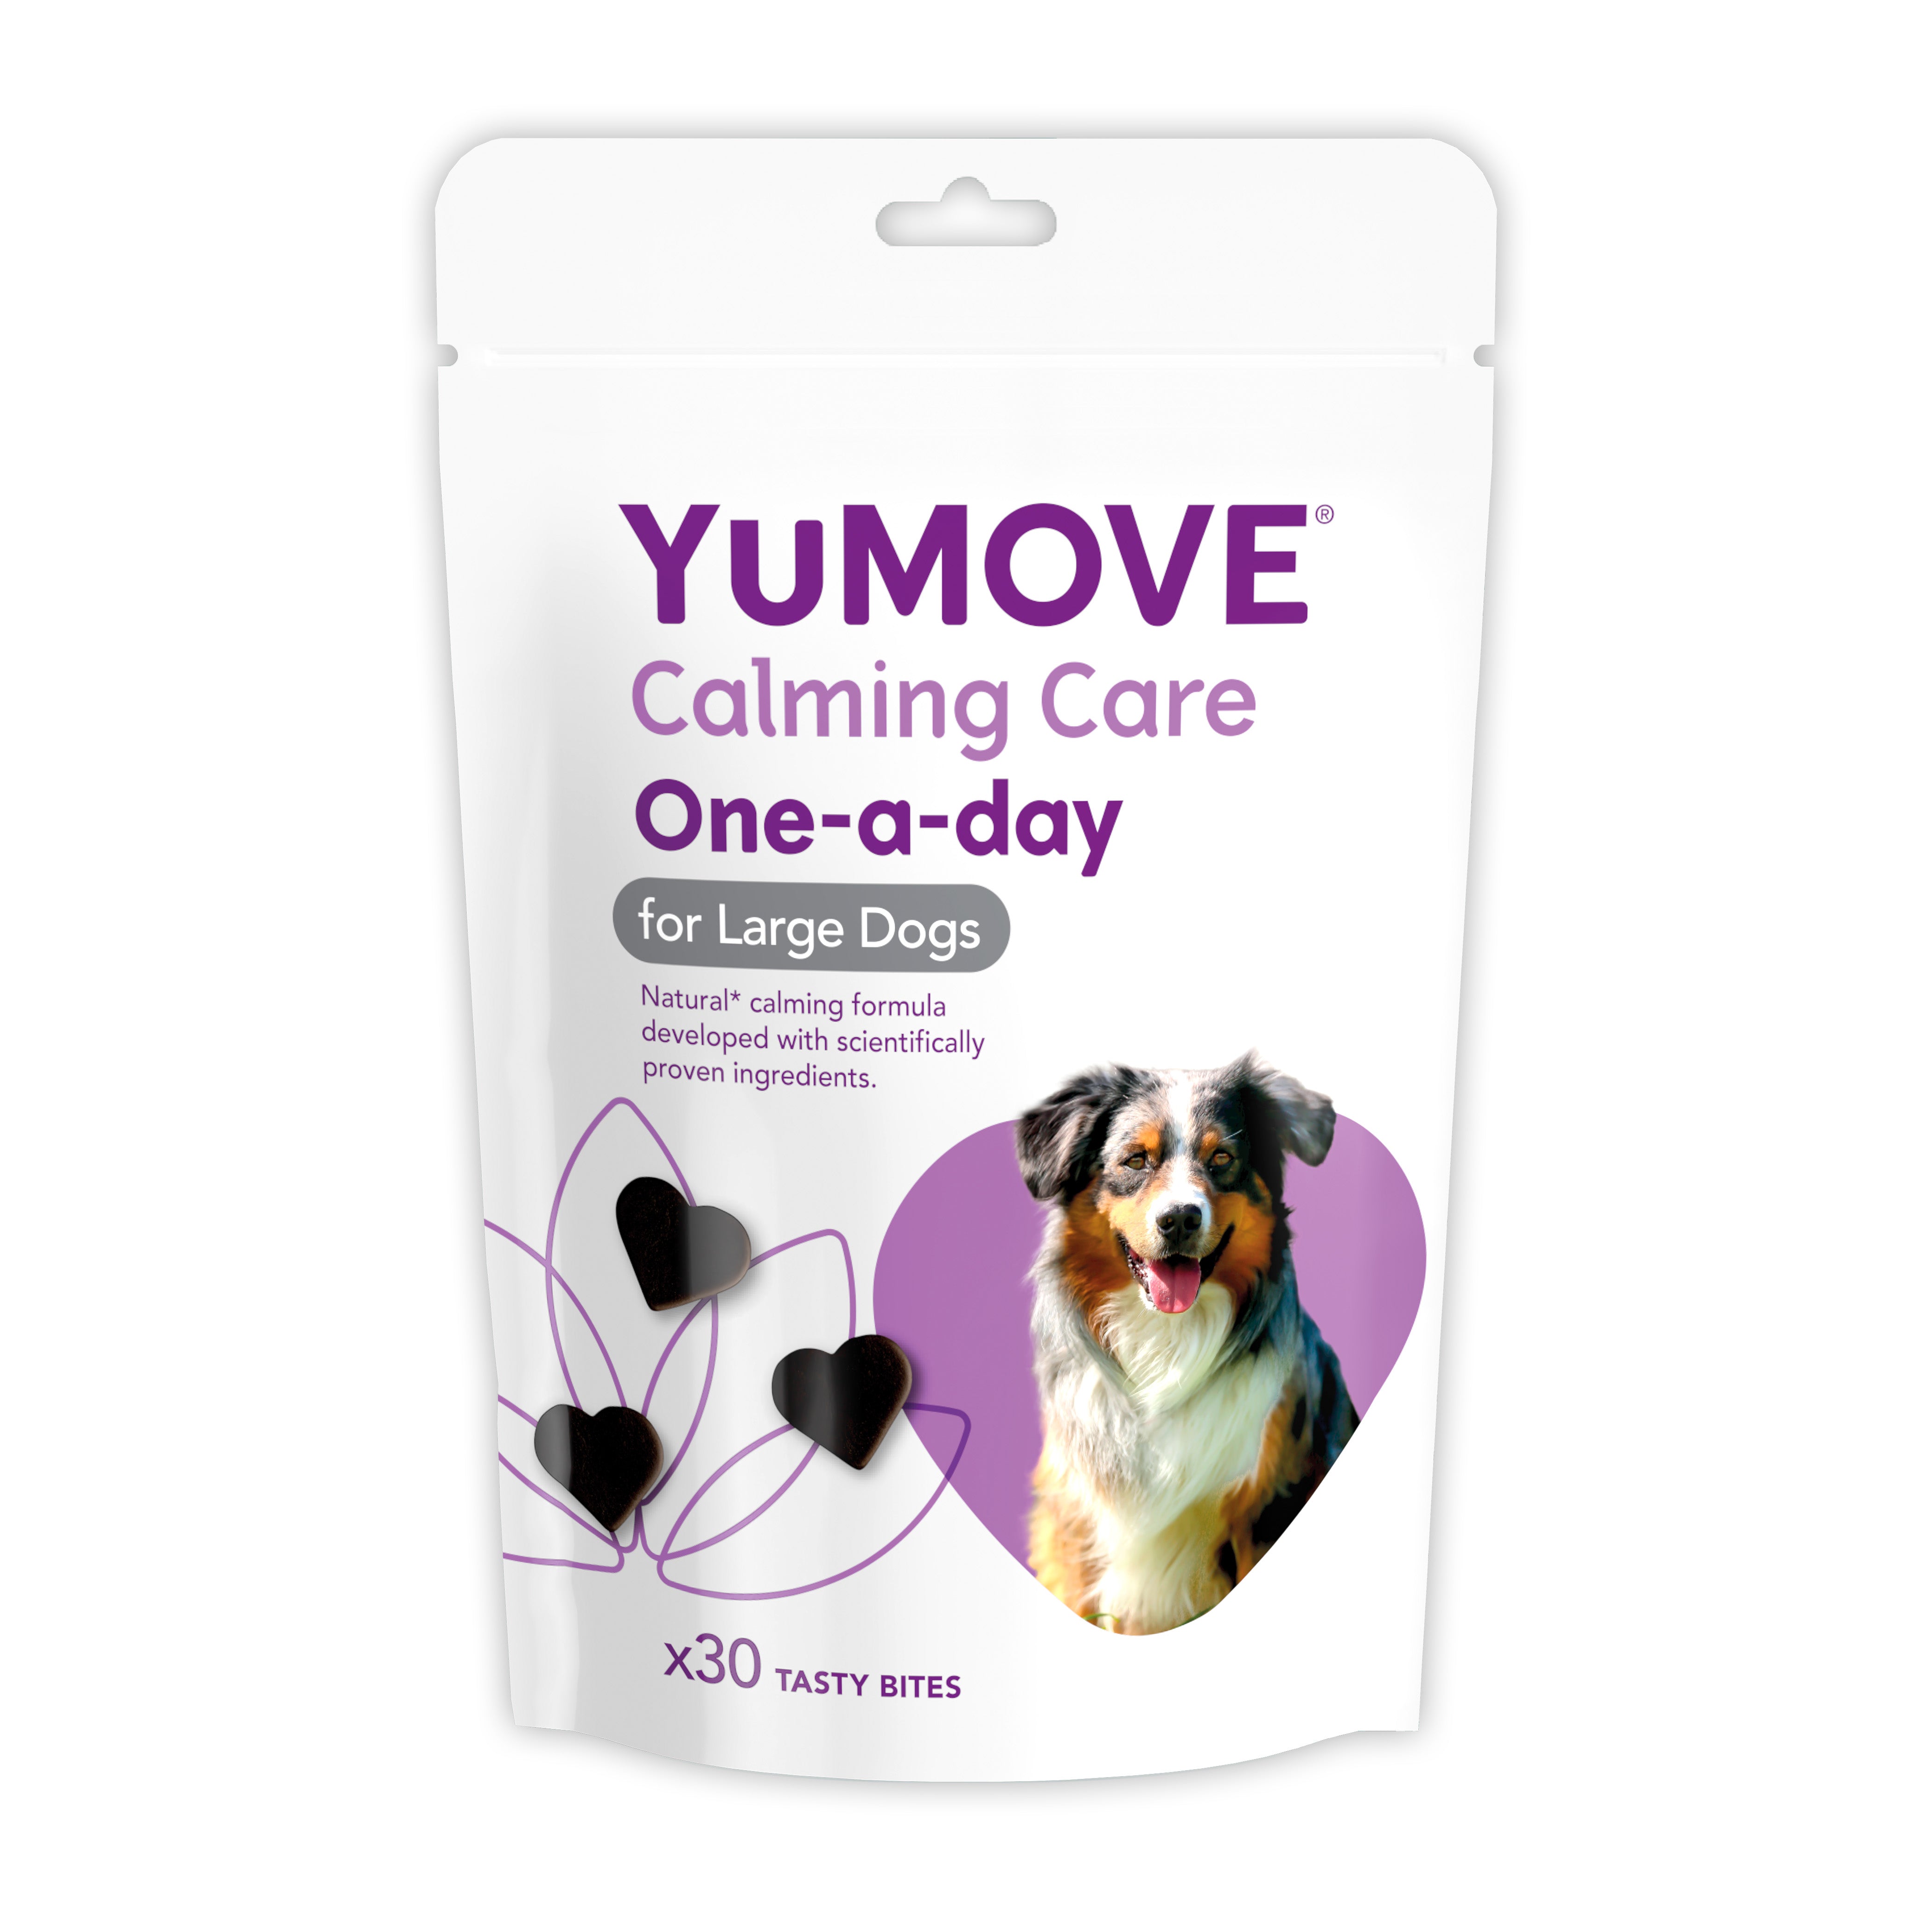 YuMOVE Calming Care One-a-day